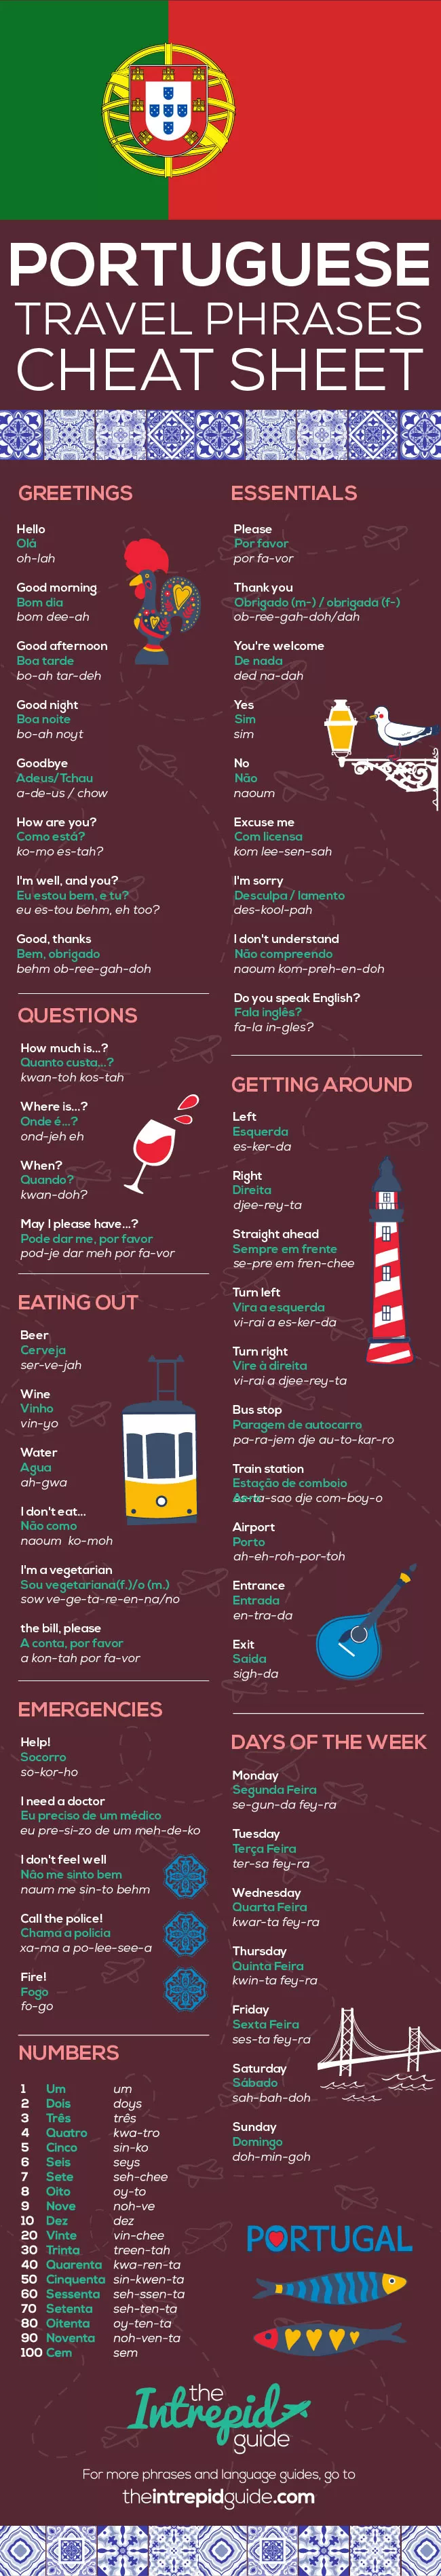 common Portuguese phrases and travel phrase guide